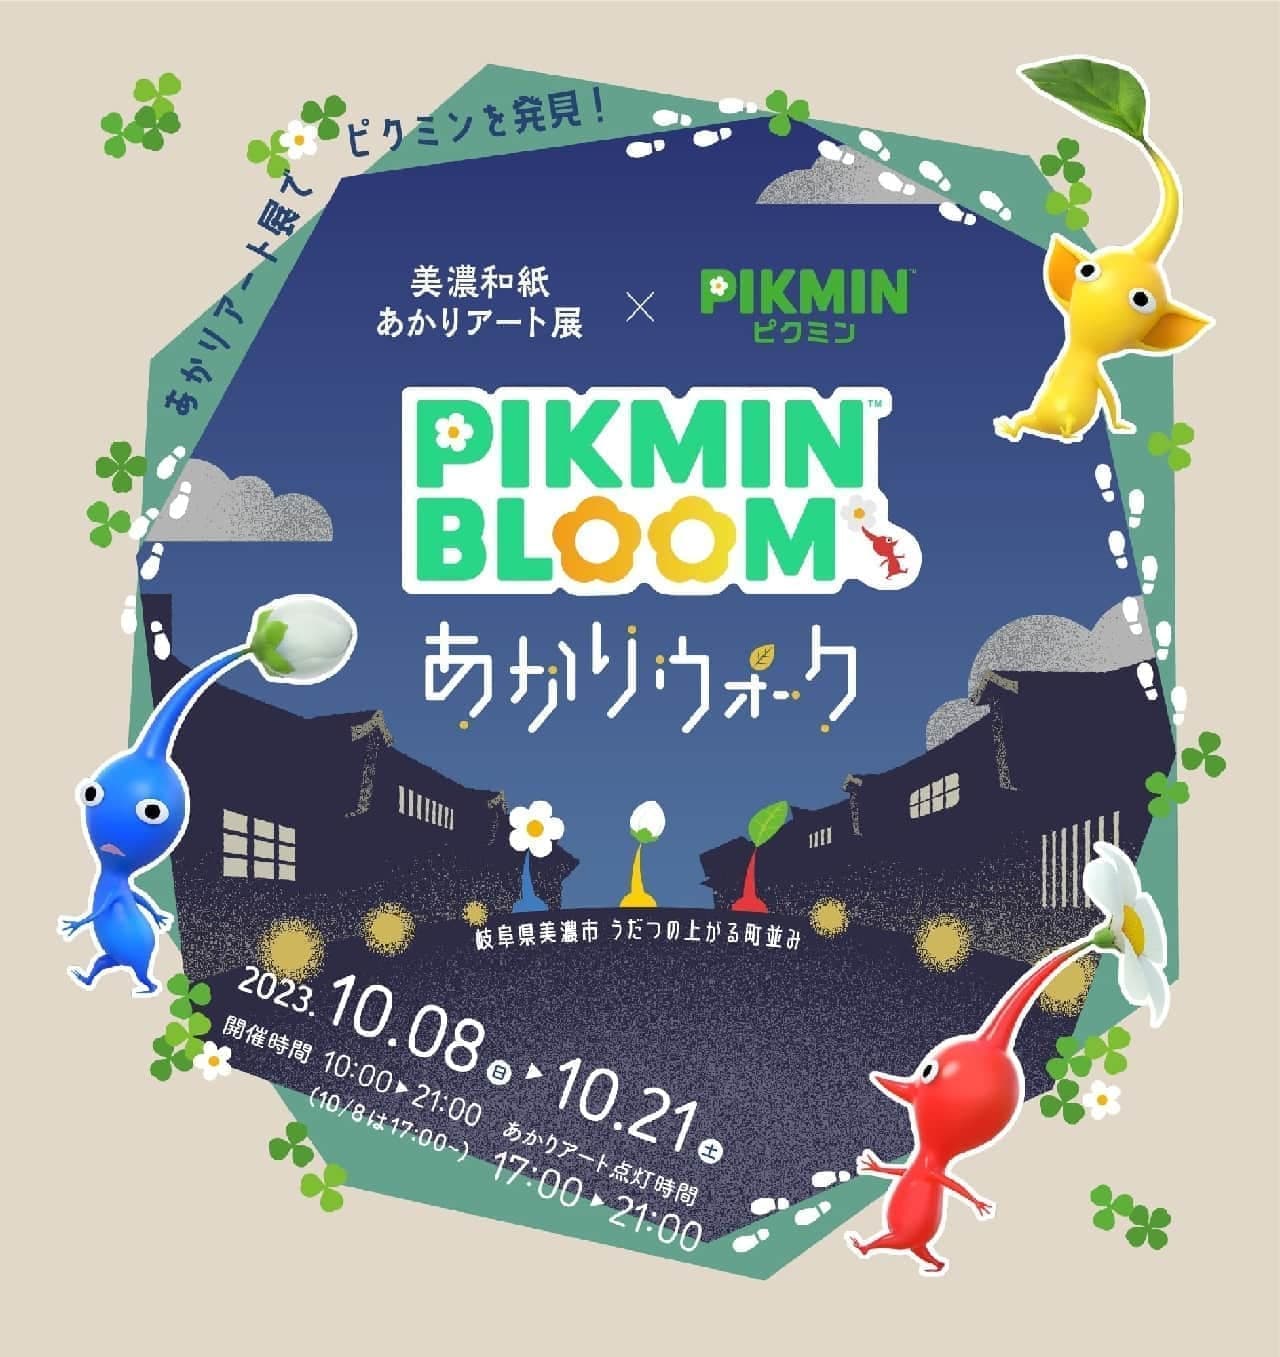 Mino Washi Light Art Exhibition x Pikmin Pikmin Bloom Akari Walk